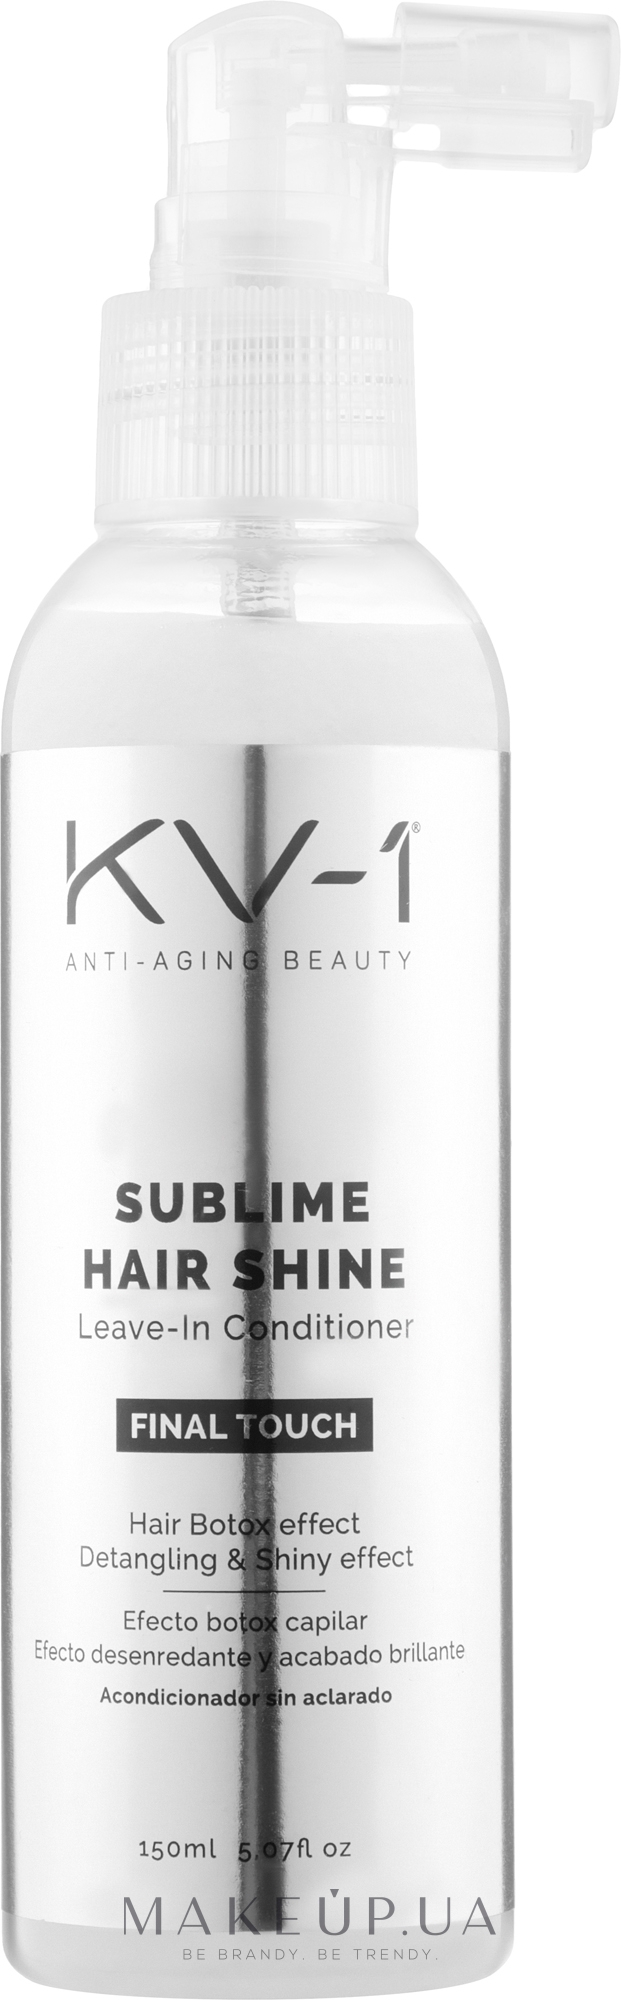 Спрей-кондиціонер для волосся з ефектом ботокса - KV-1 Final Touch Sublime Hair Shine Leave-In Conditioner — фото 150ml